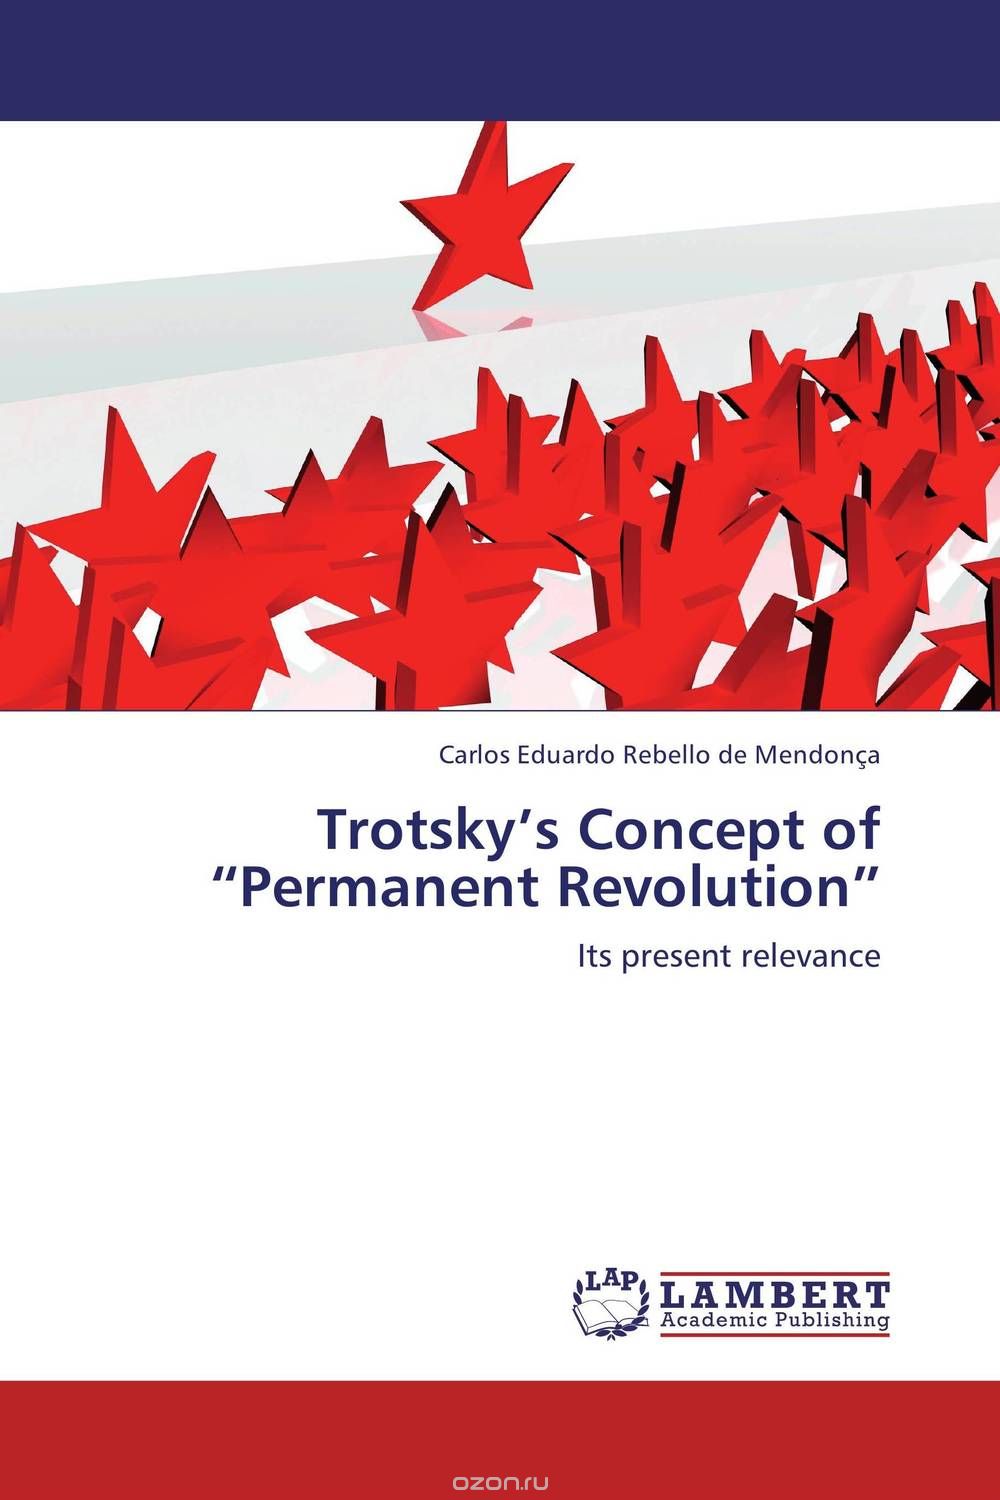 Trotsky’s Concept of “Permanent Revolution”